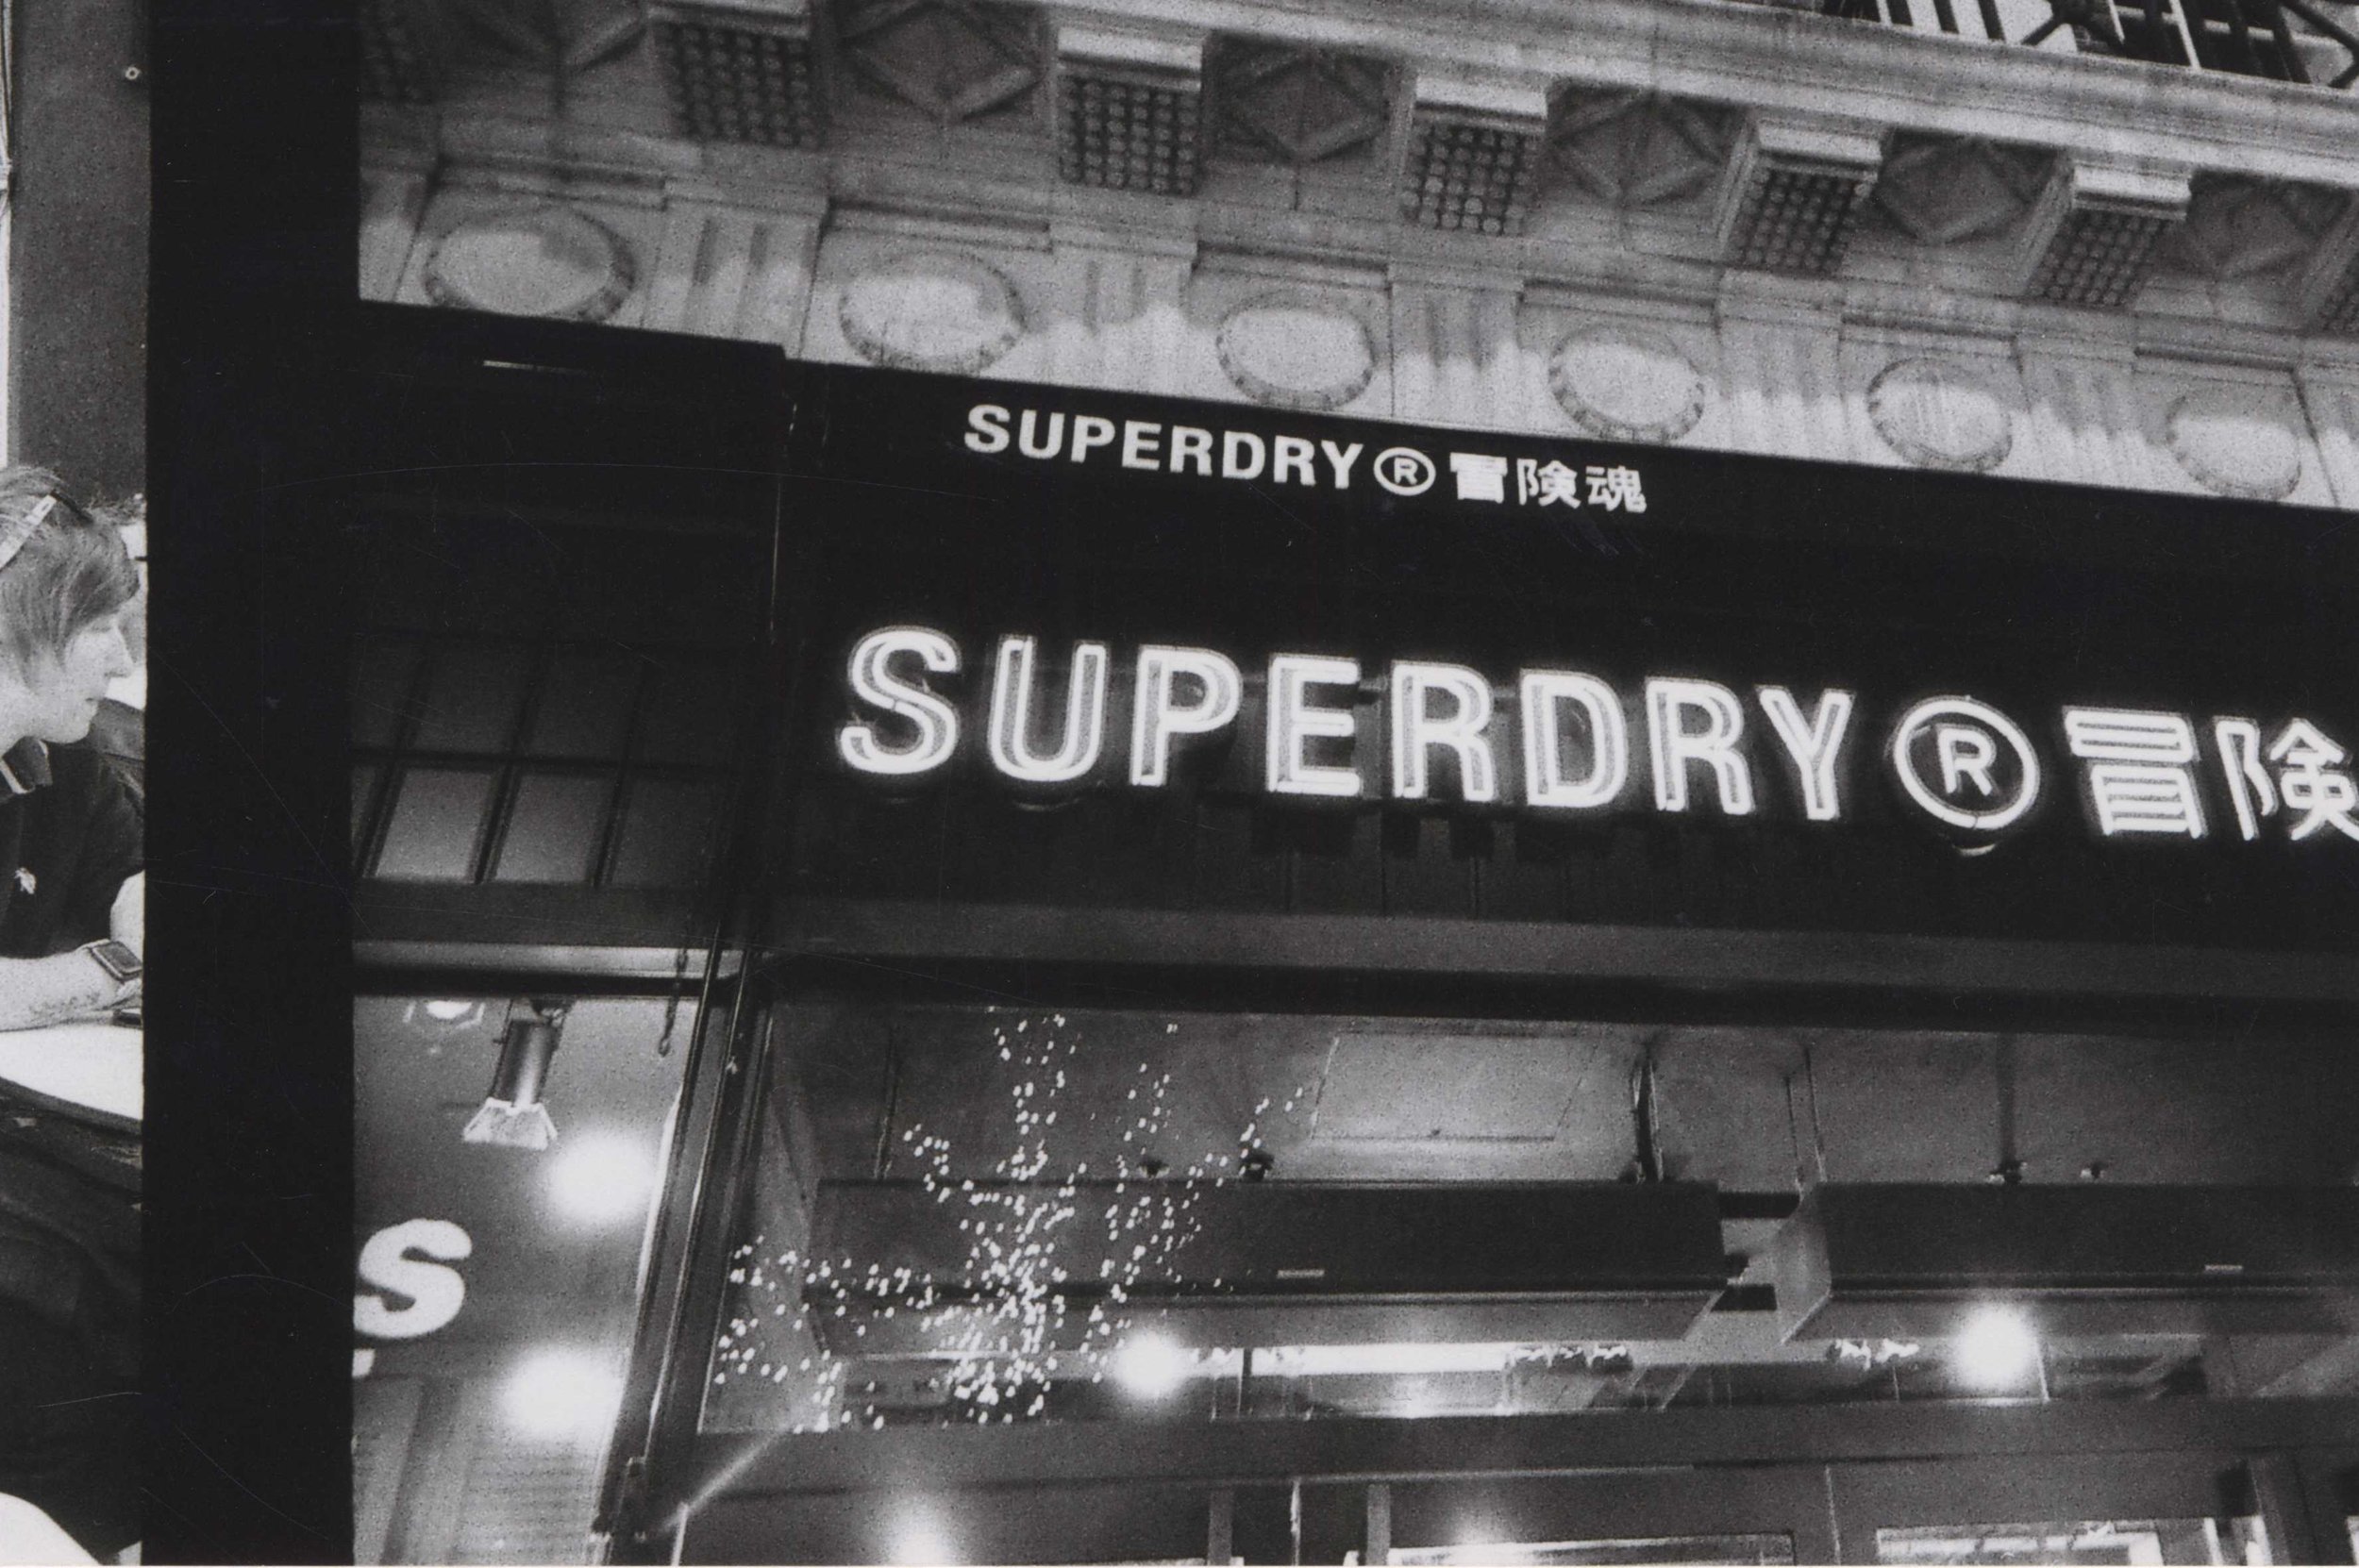   Superdry  